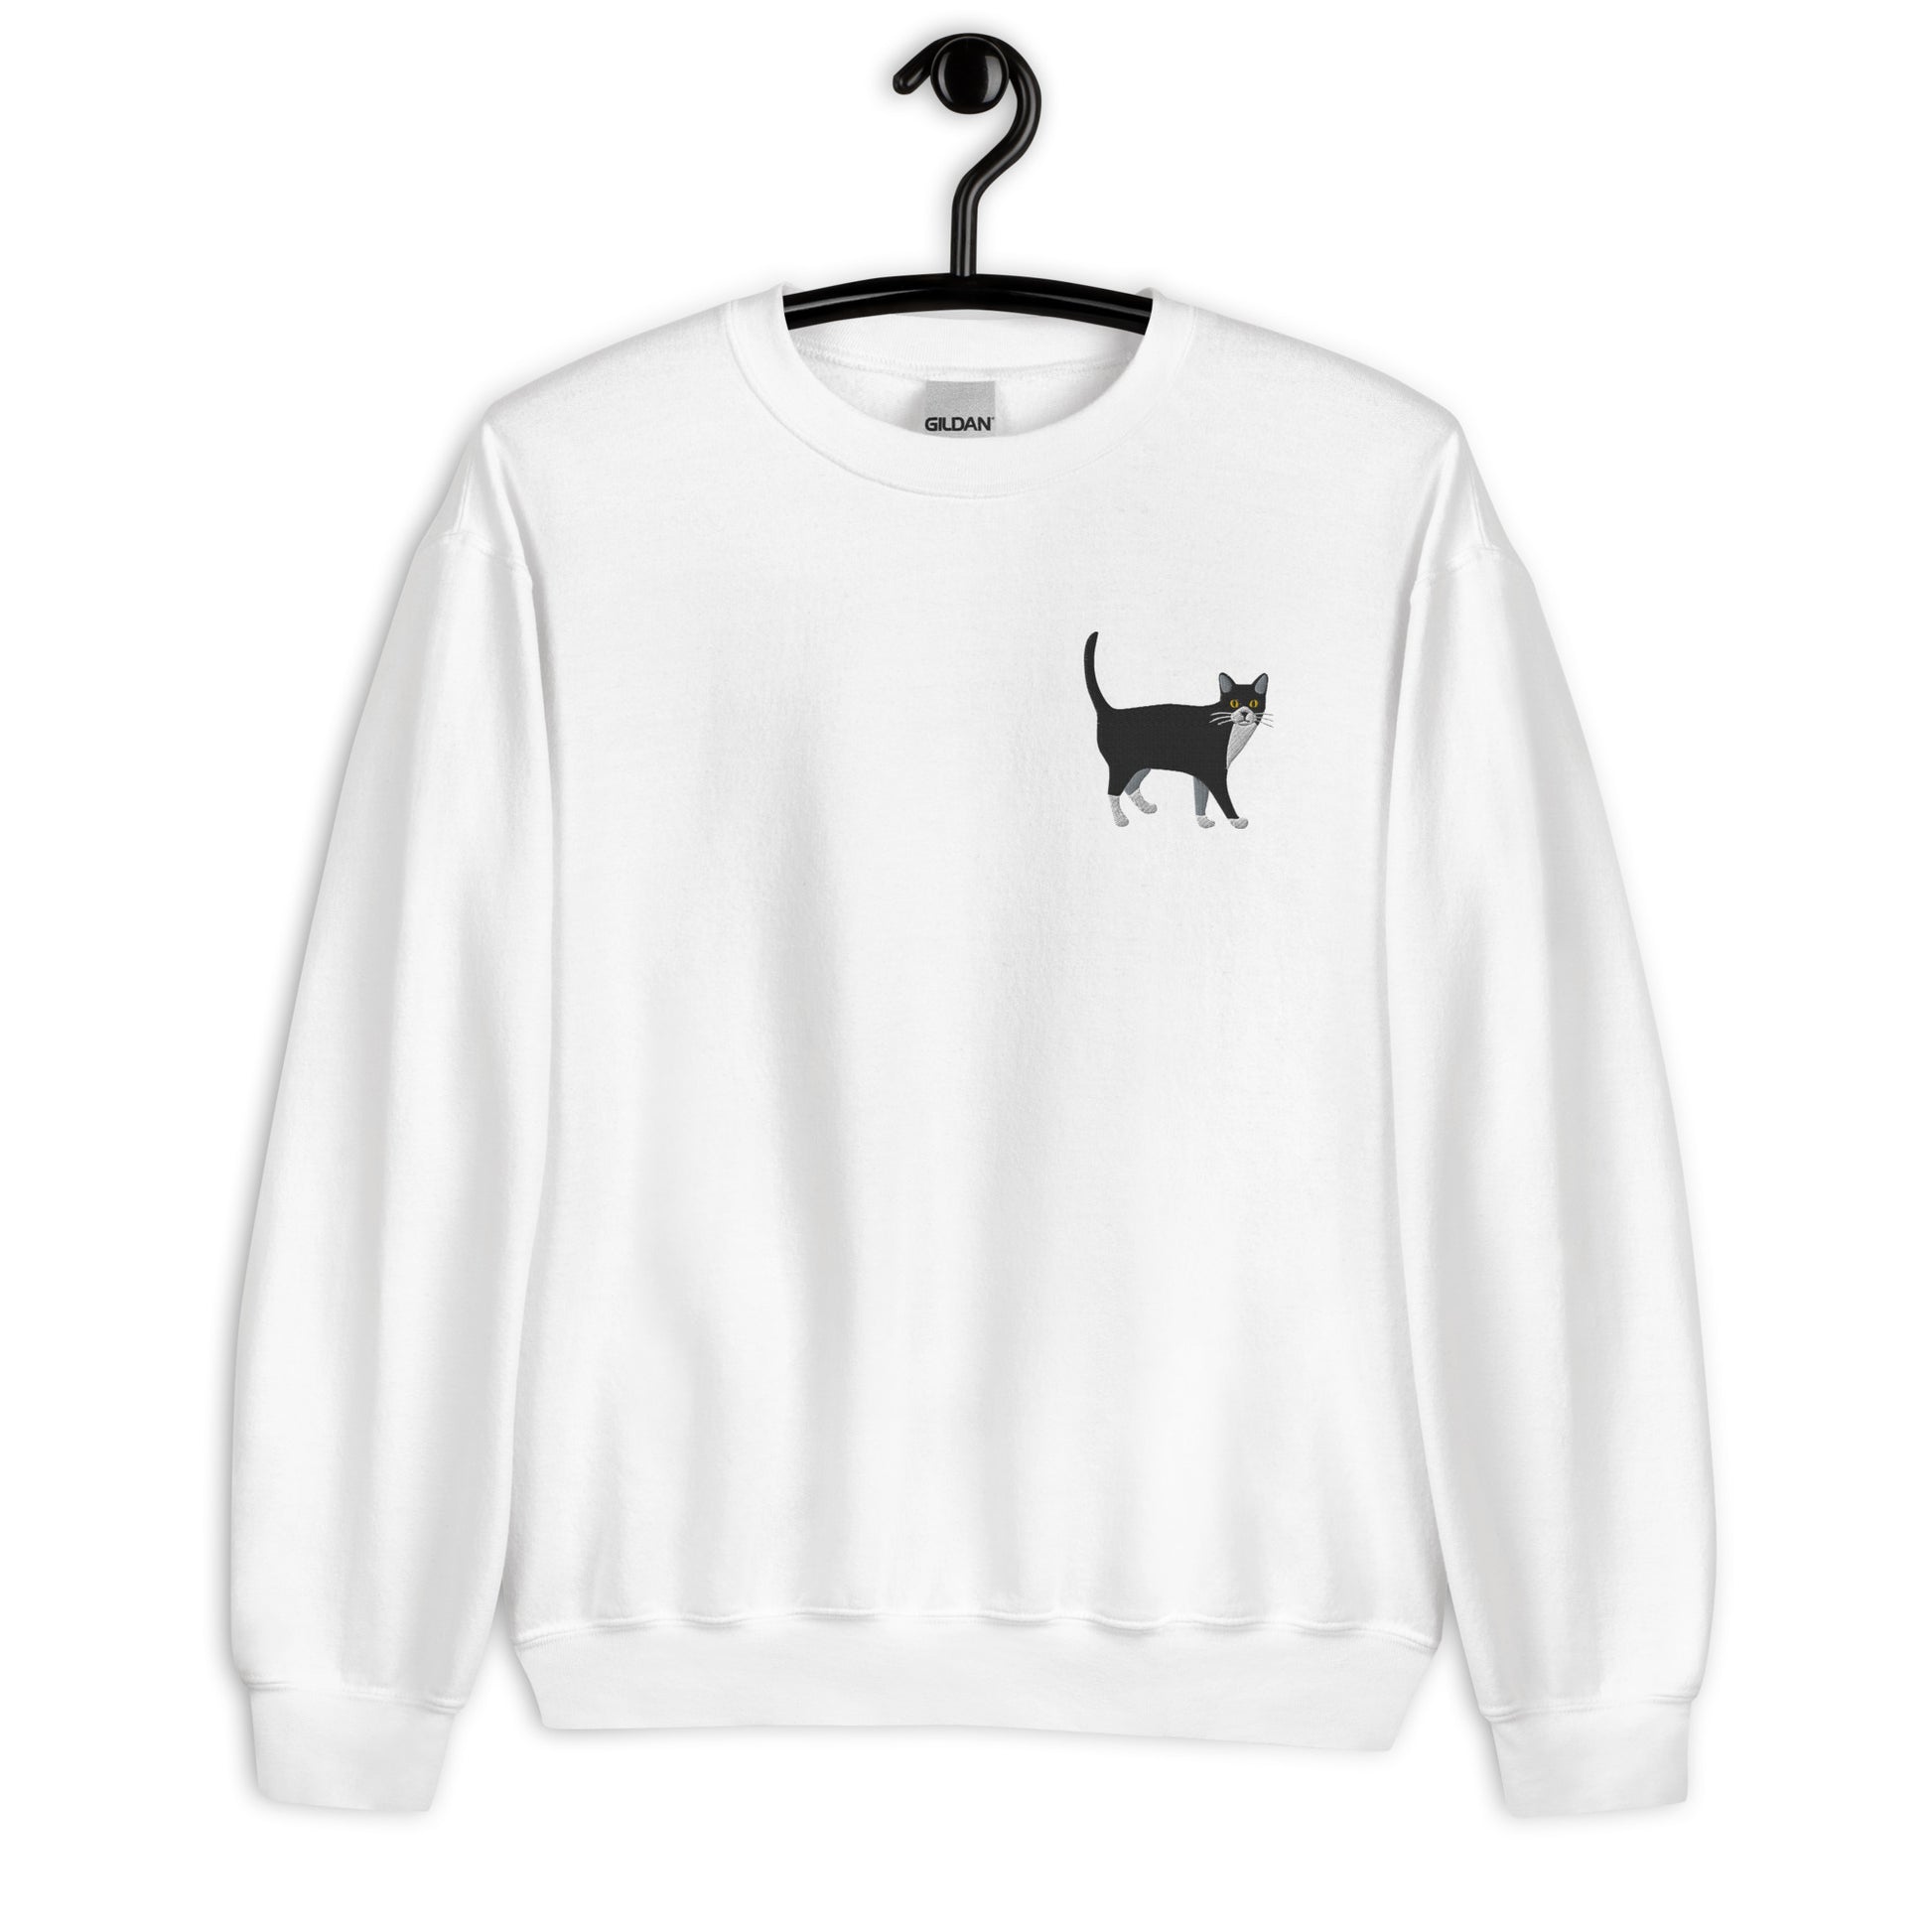 Tuxedo Cat Embroidered Sweatshirt, Black White Kitten Graphic Crewneck Sweater Pullover Men Women Mom Aesthetic Top Starcove Fashion